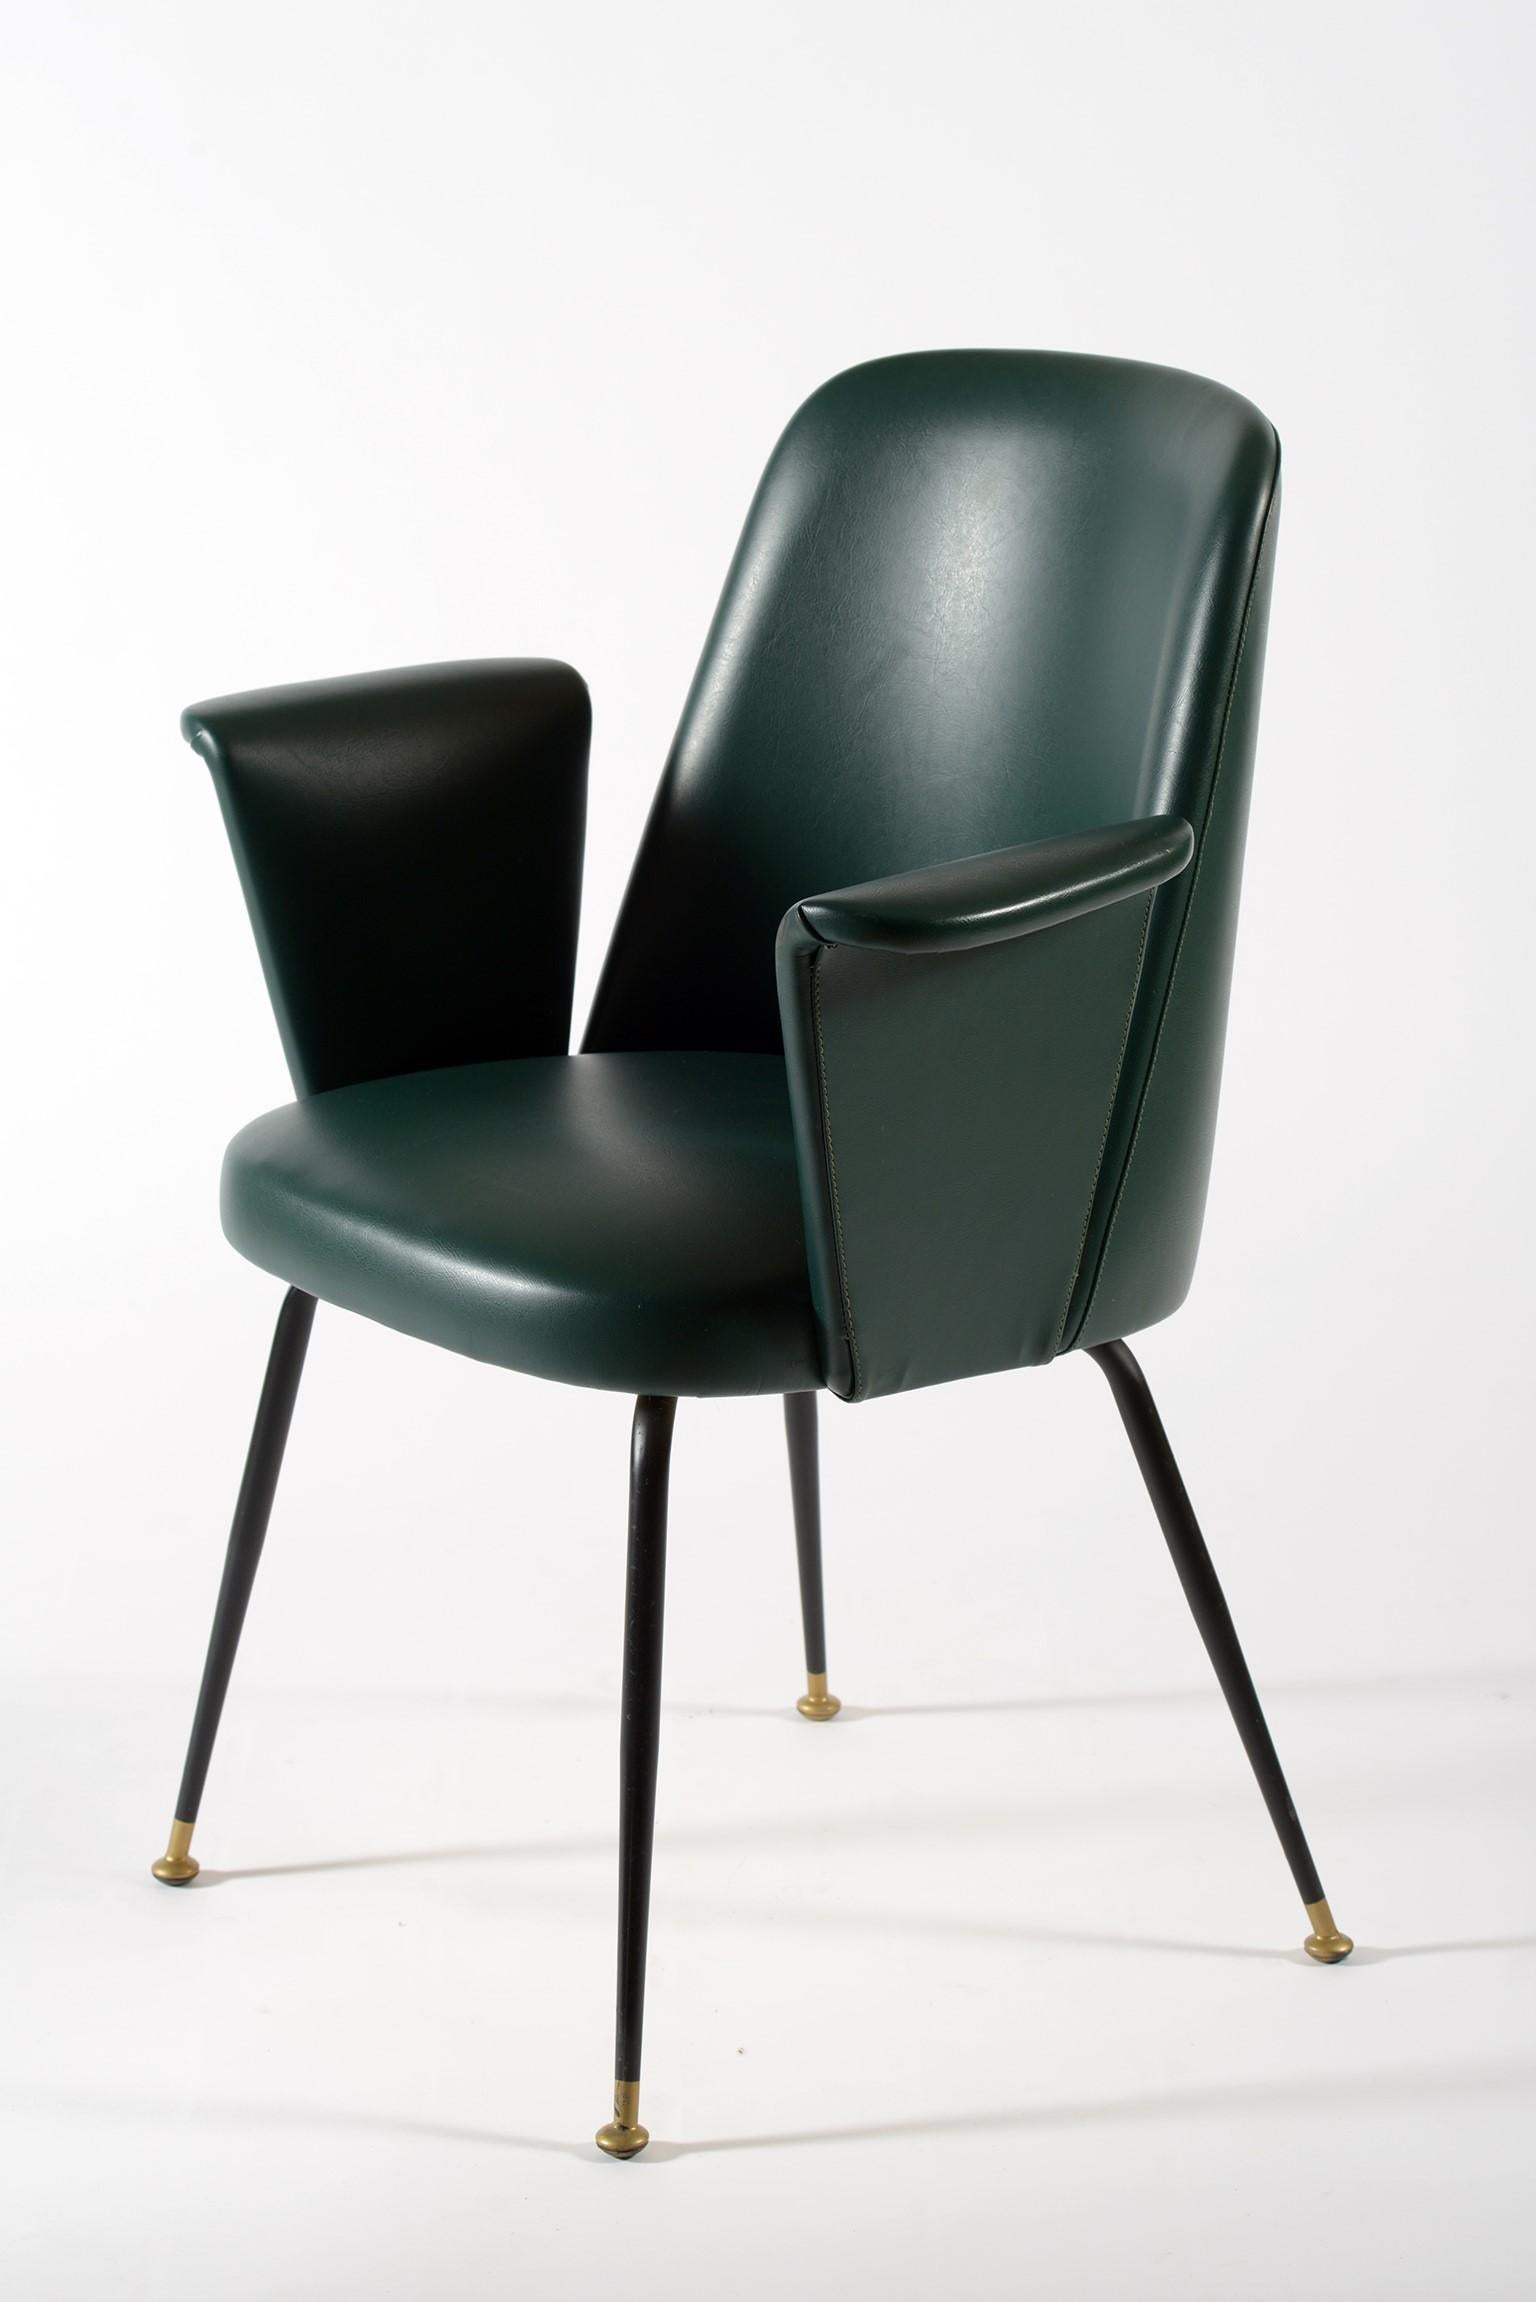 Mid-Century Modern Midcentury Italian Pair of Chairs Brass Leggs Green Original Leatherette, 1950s